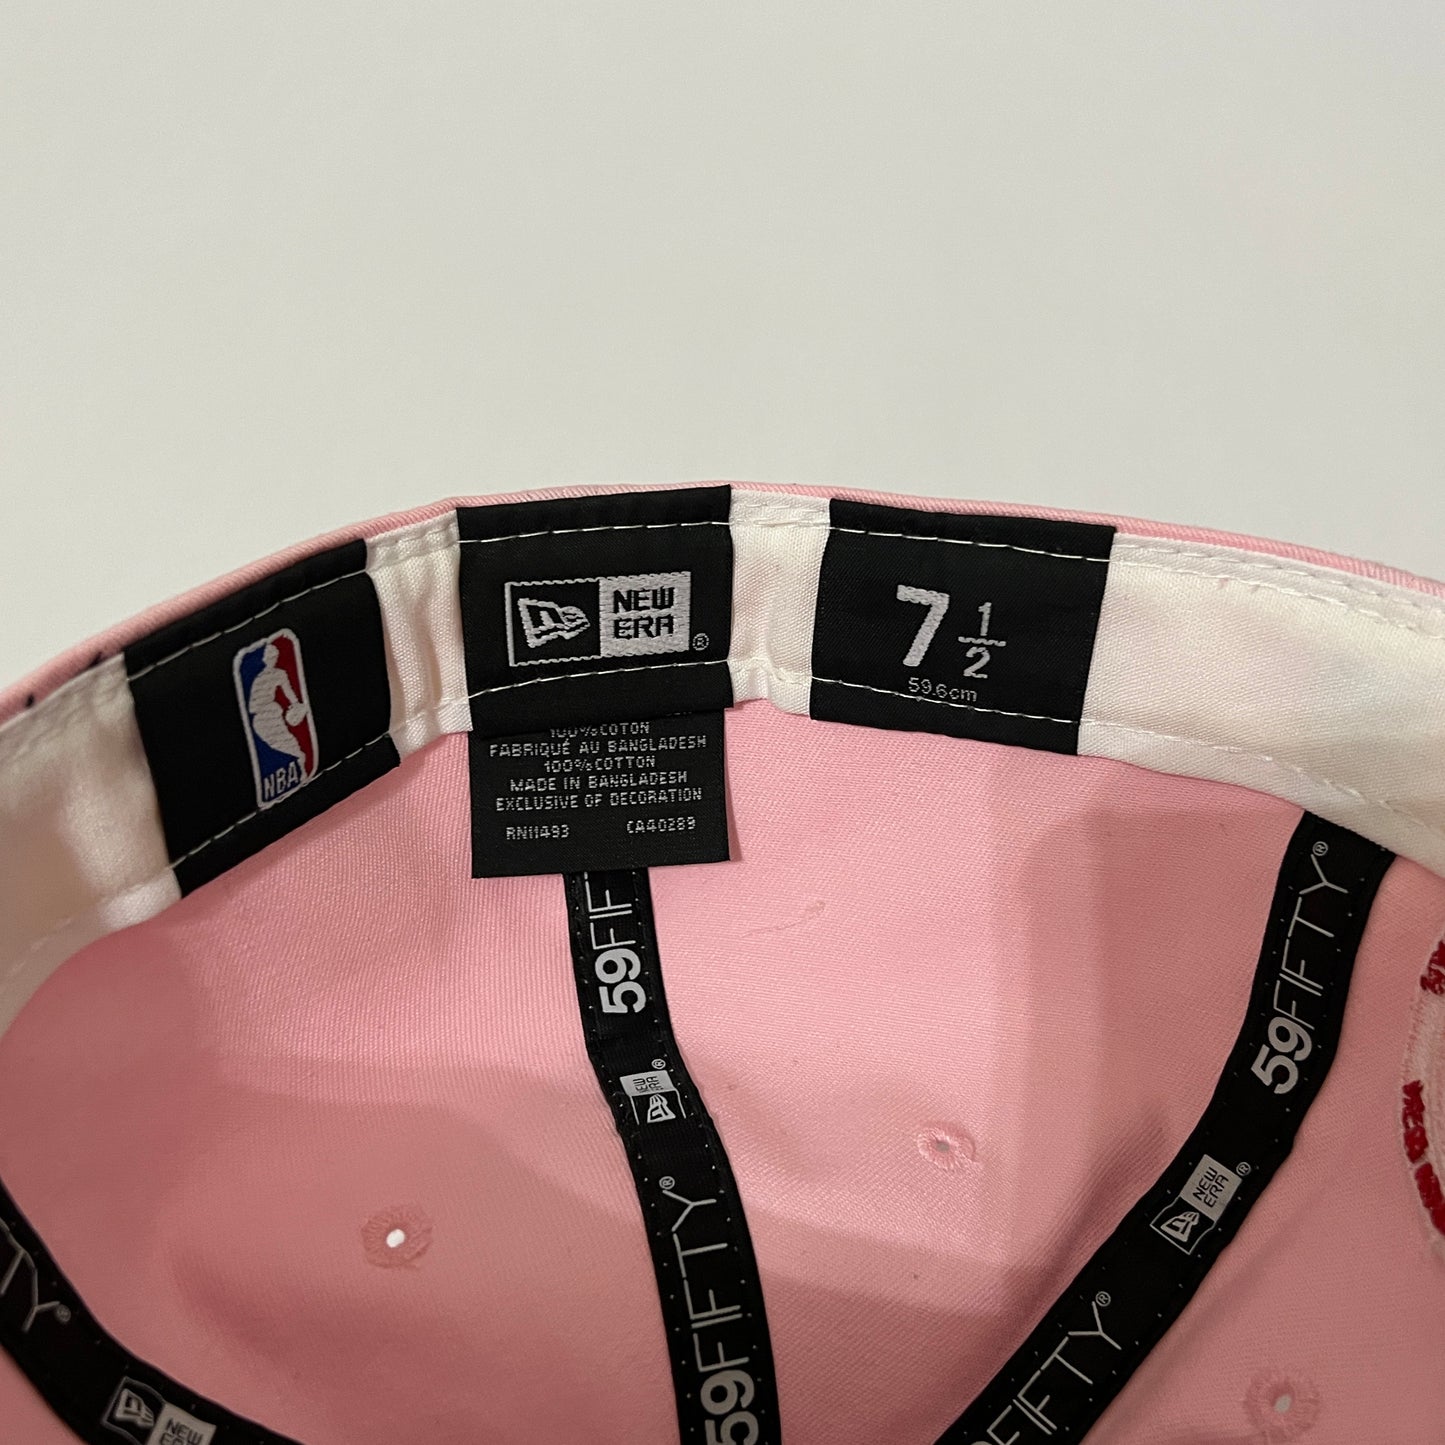 New York Knicks Candy Cane 59Fifty New Era Hat - 7 1/2